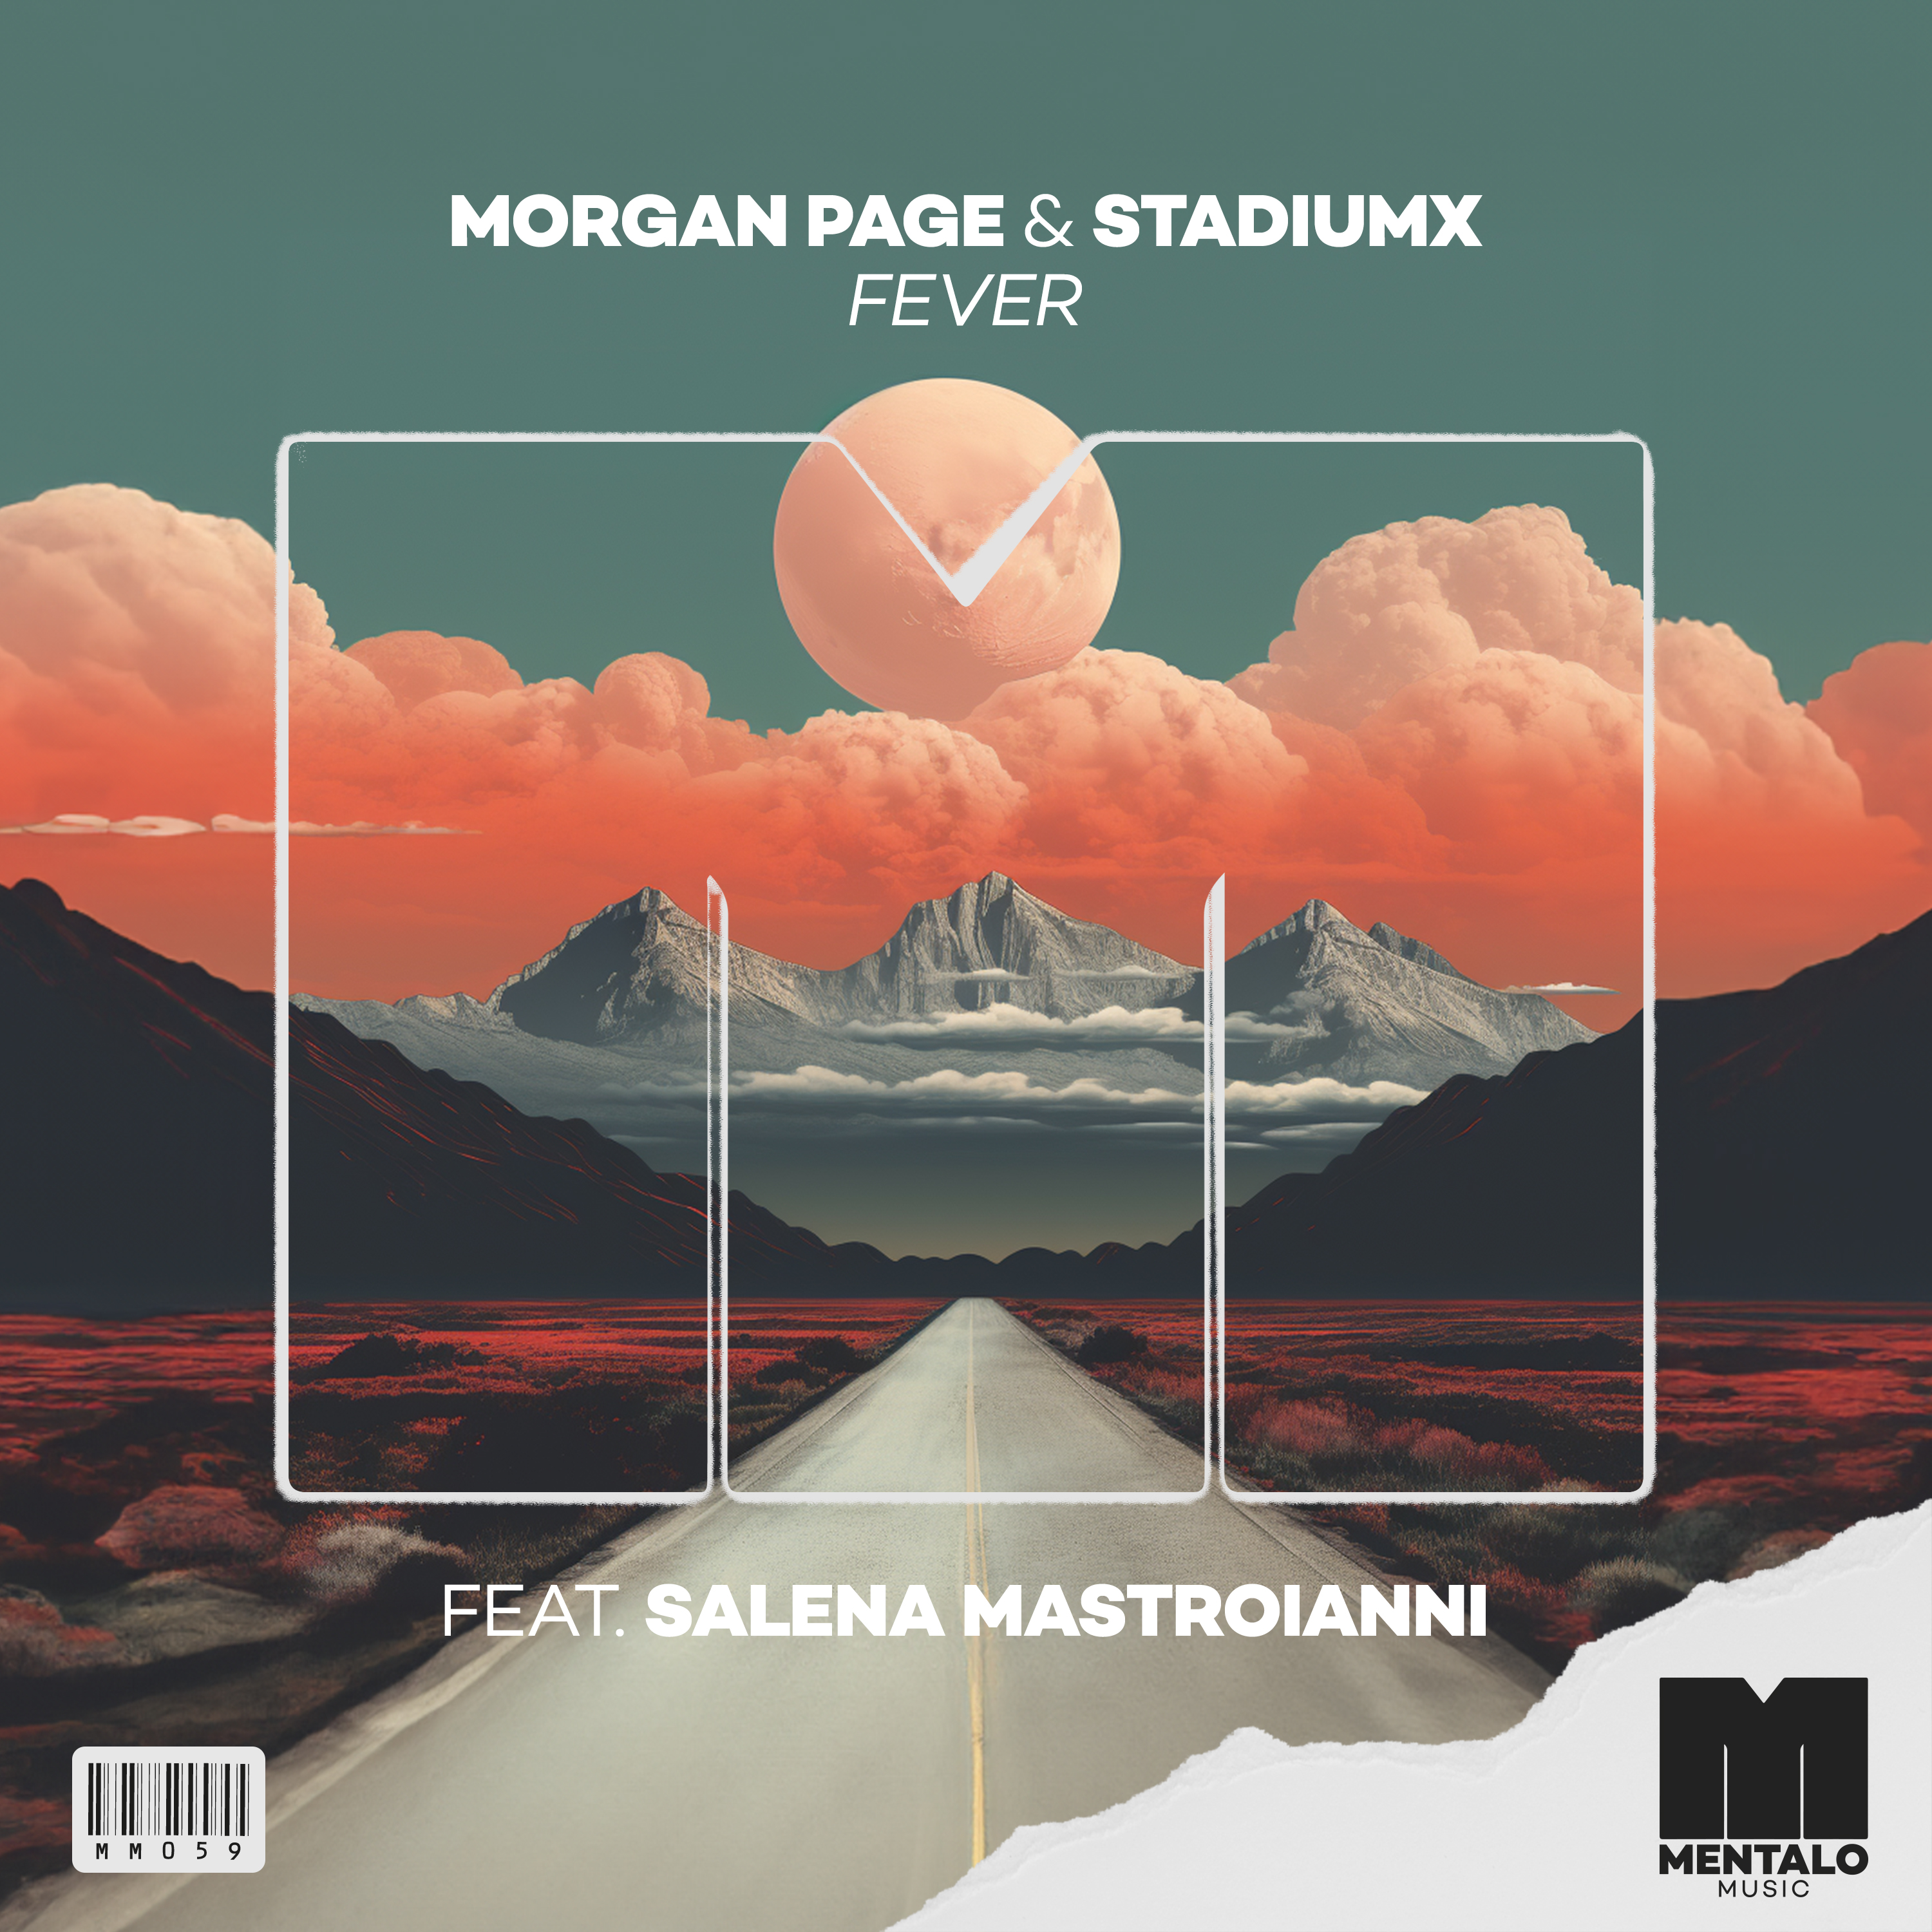 Morgan Page & Stadiumx ft. featuring Salena Mastroianni Fever cover artwork